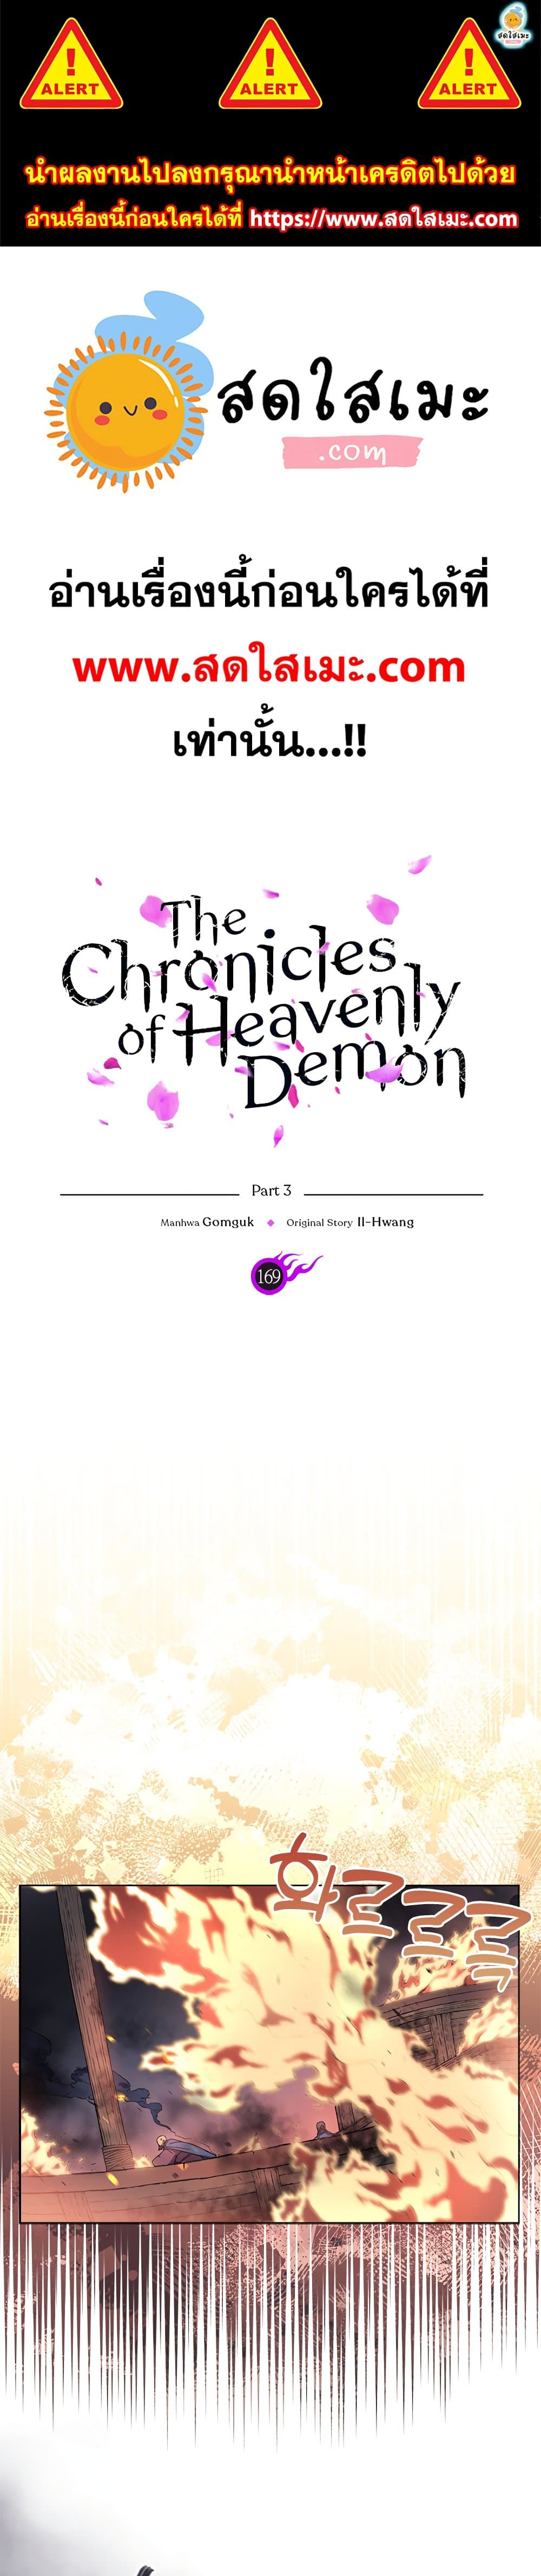 Chronicles of Heavenly Demon 169 01